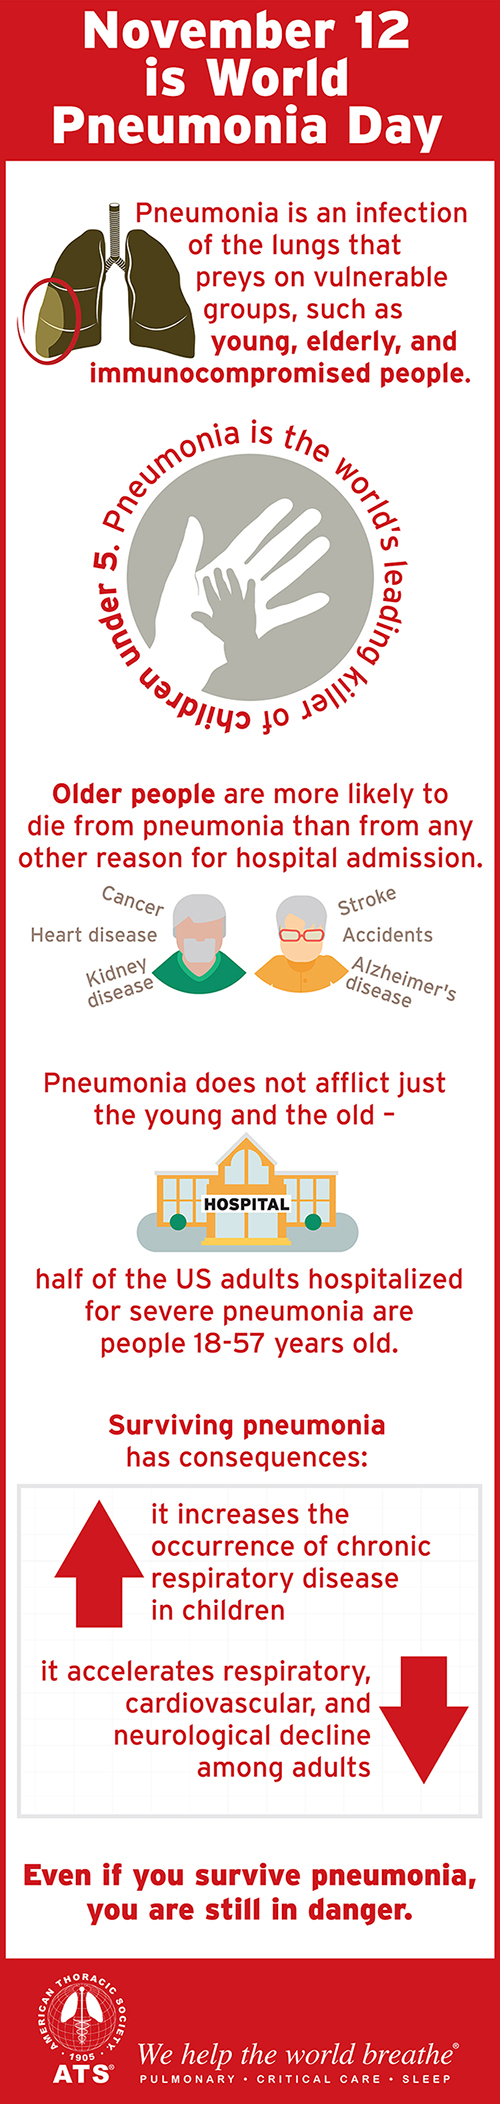 World Pneumonia Day 2016